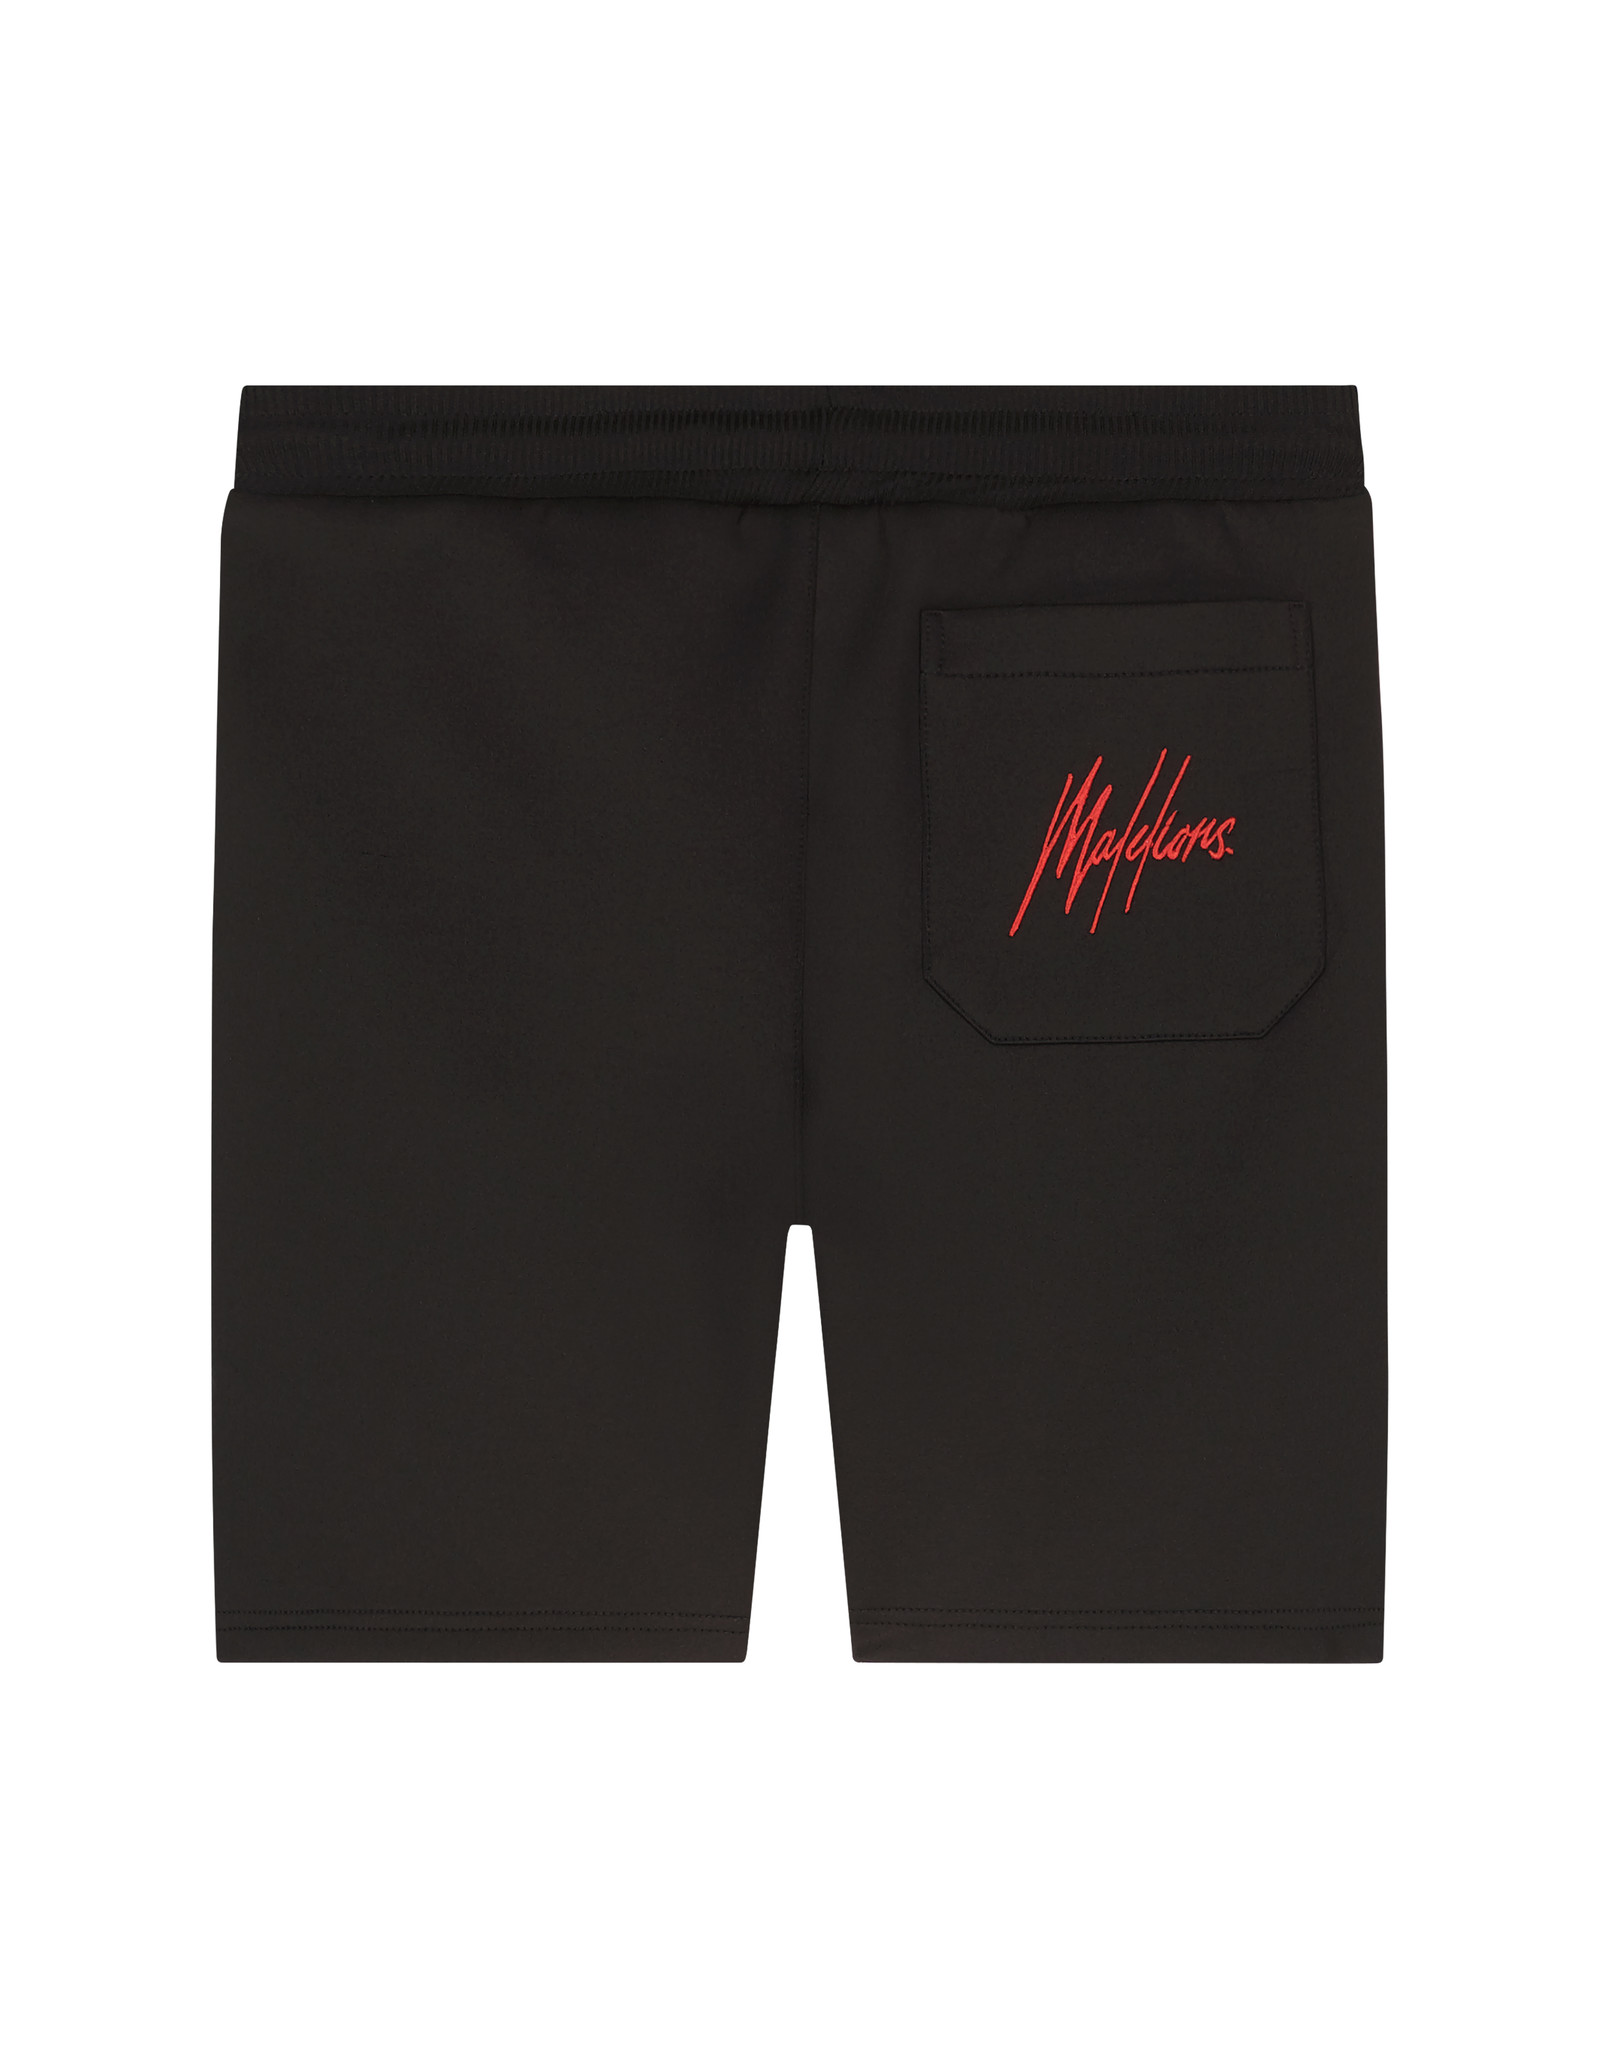 Malelions Junior Sport Striker Short Black/Neon Red